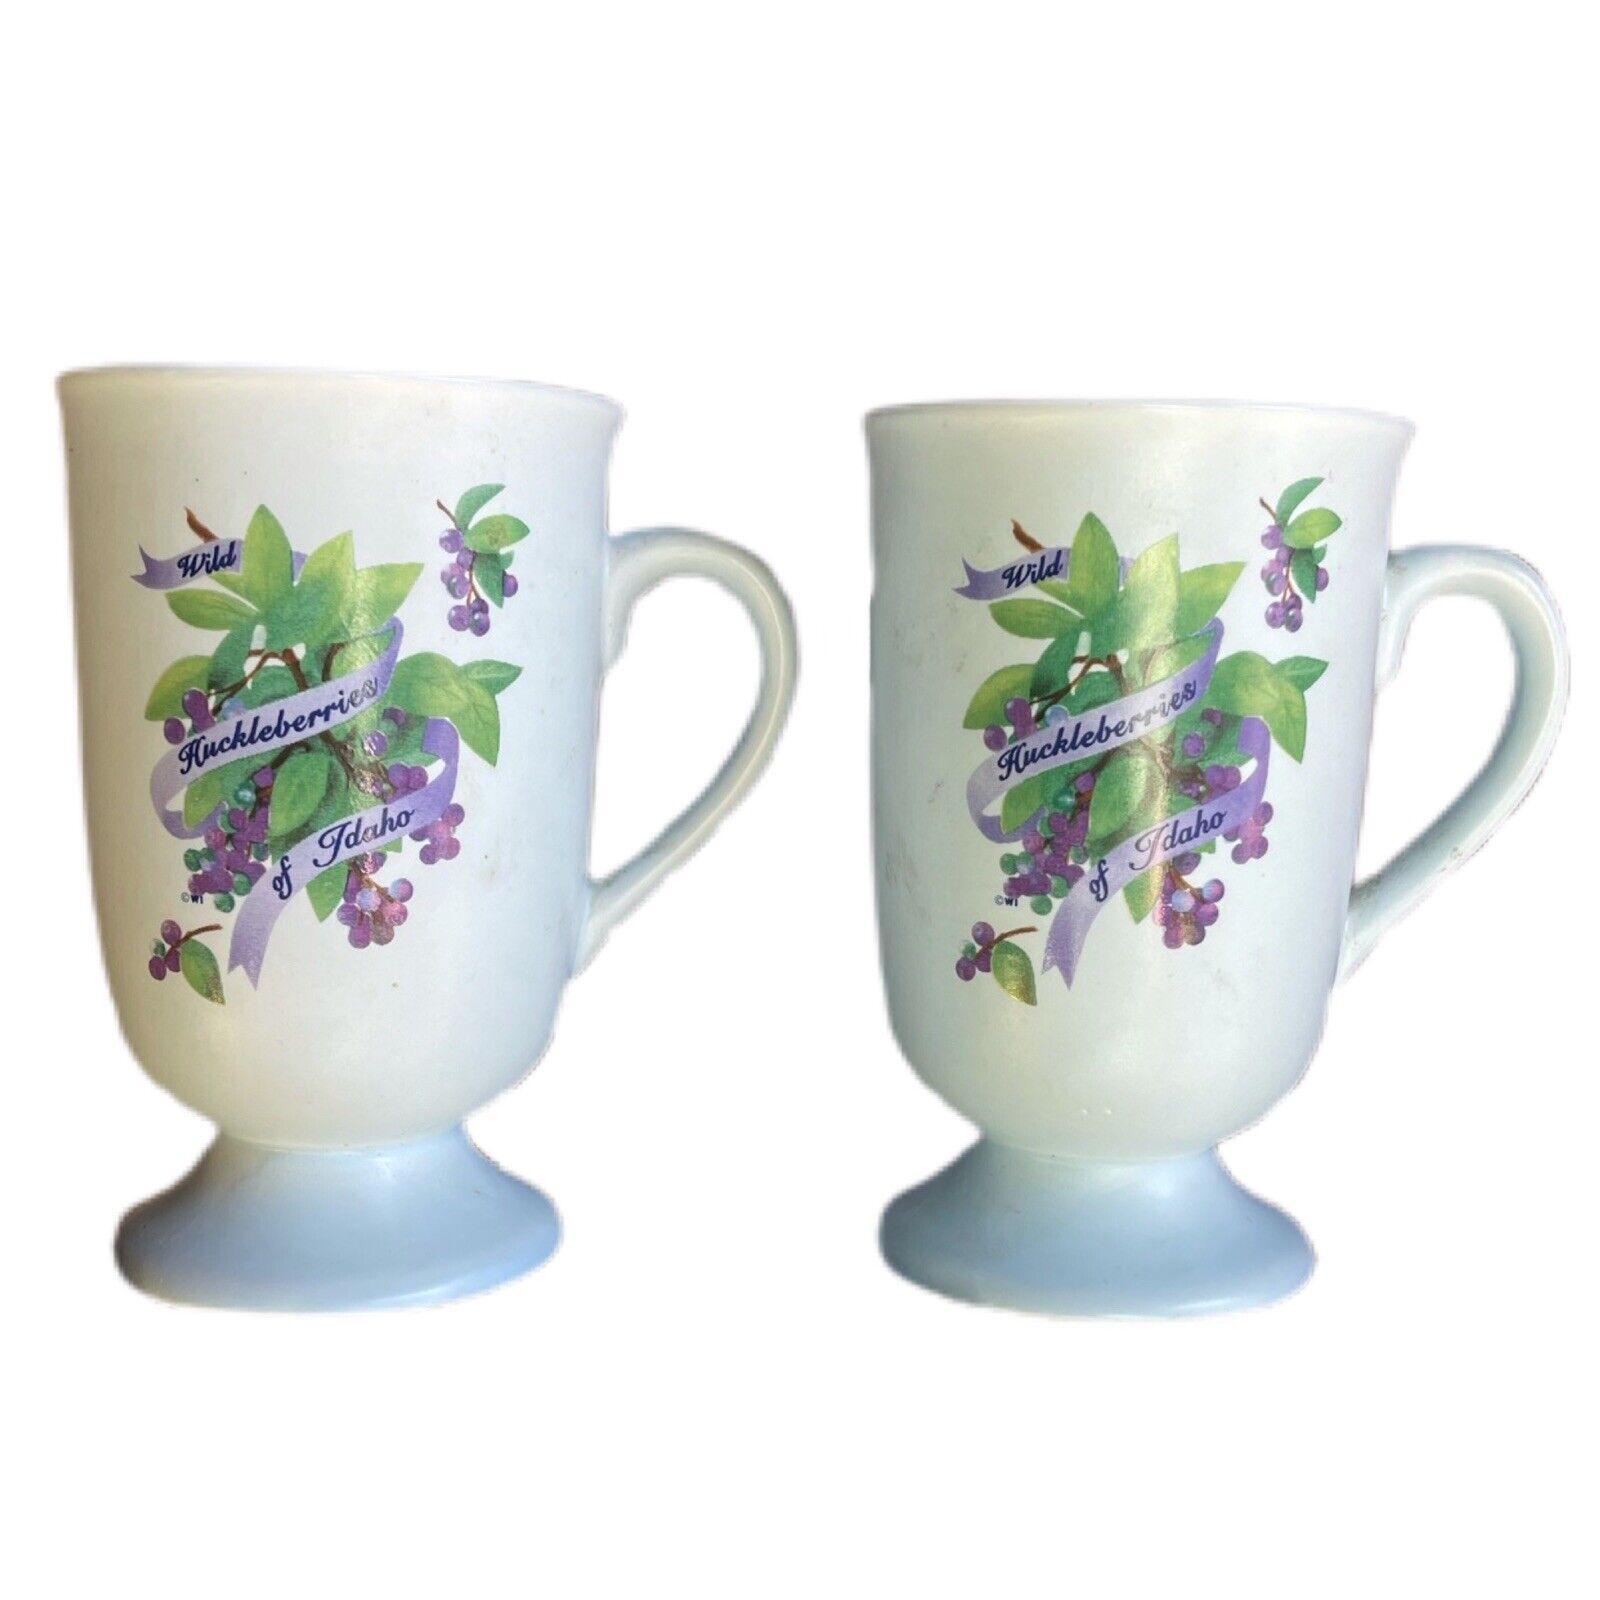 Vintage Ceramic Irish Coffee Latte Mugs Wild Huckleberries of Idaho Pair Set Two